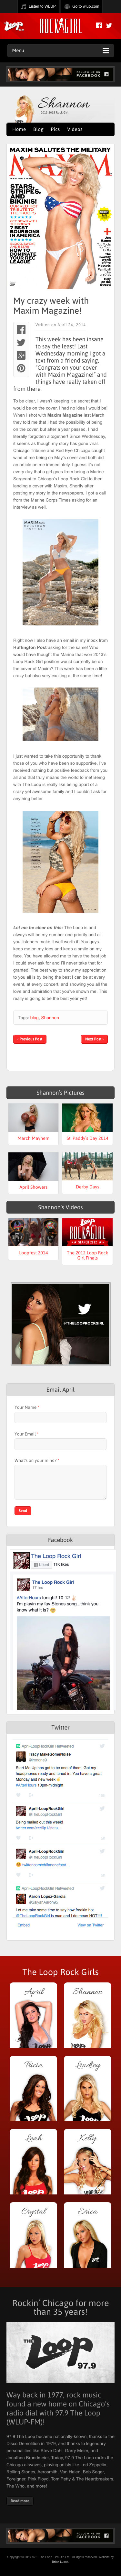 The Loop Rock Girl - Sample Post - iPhone View